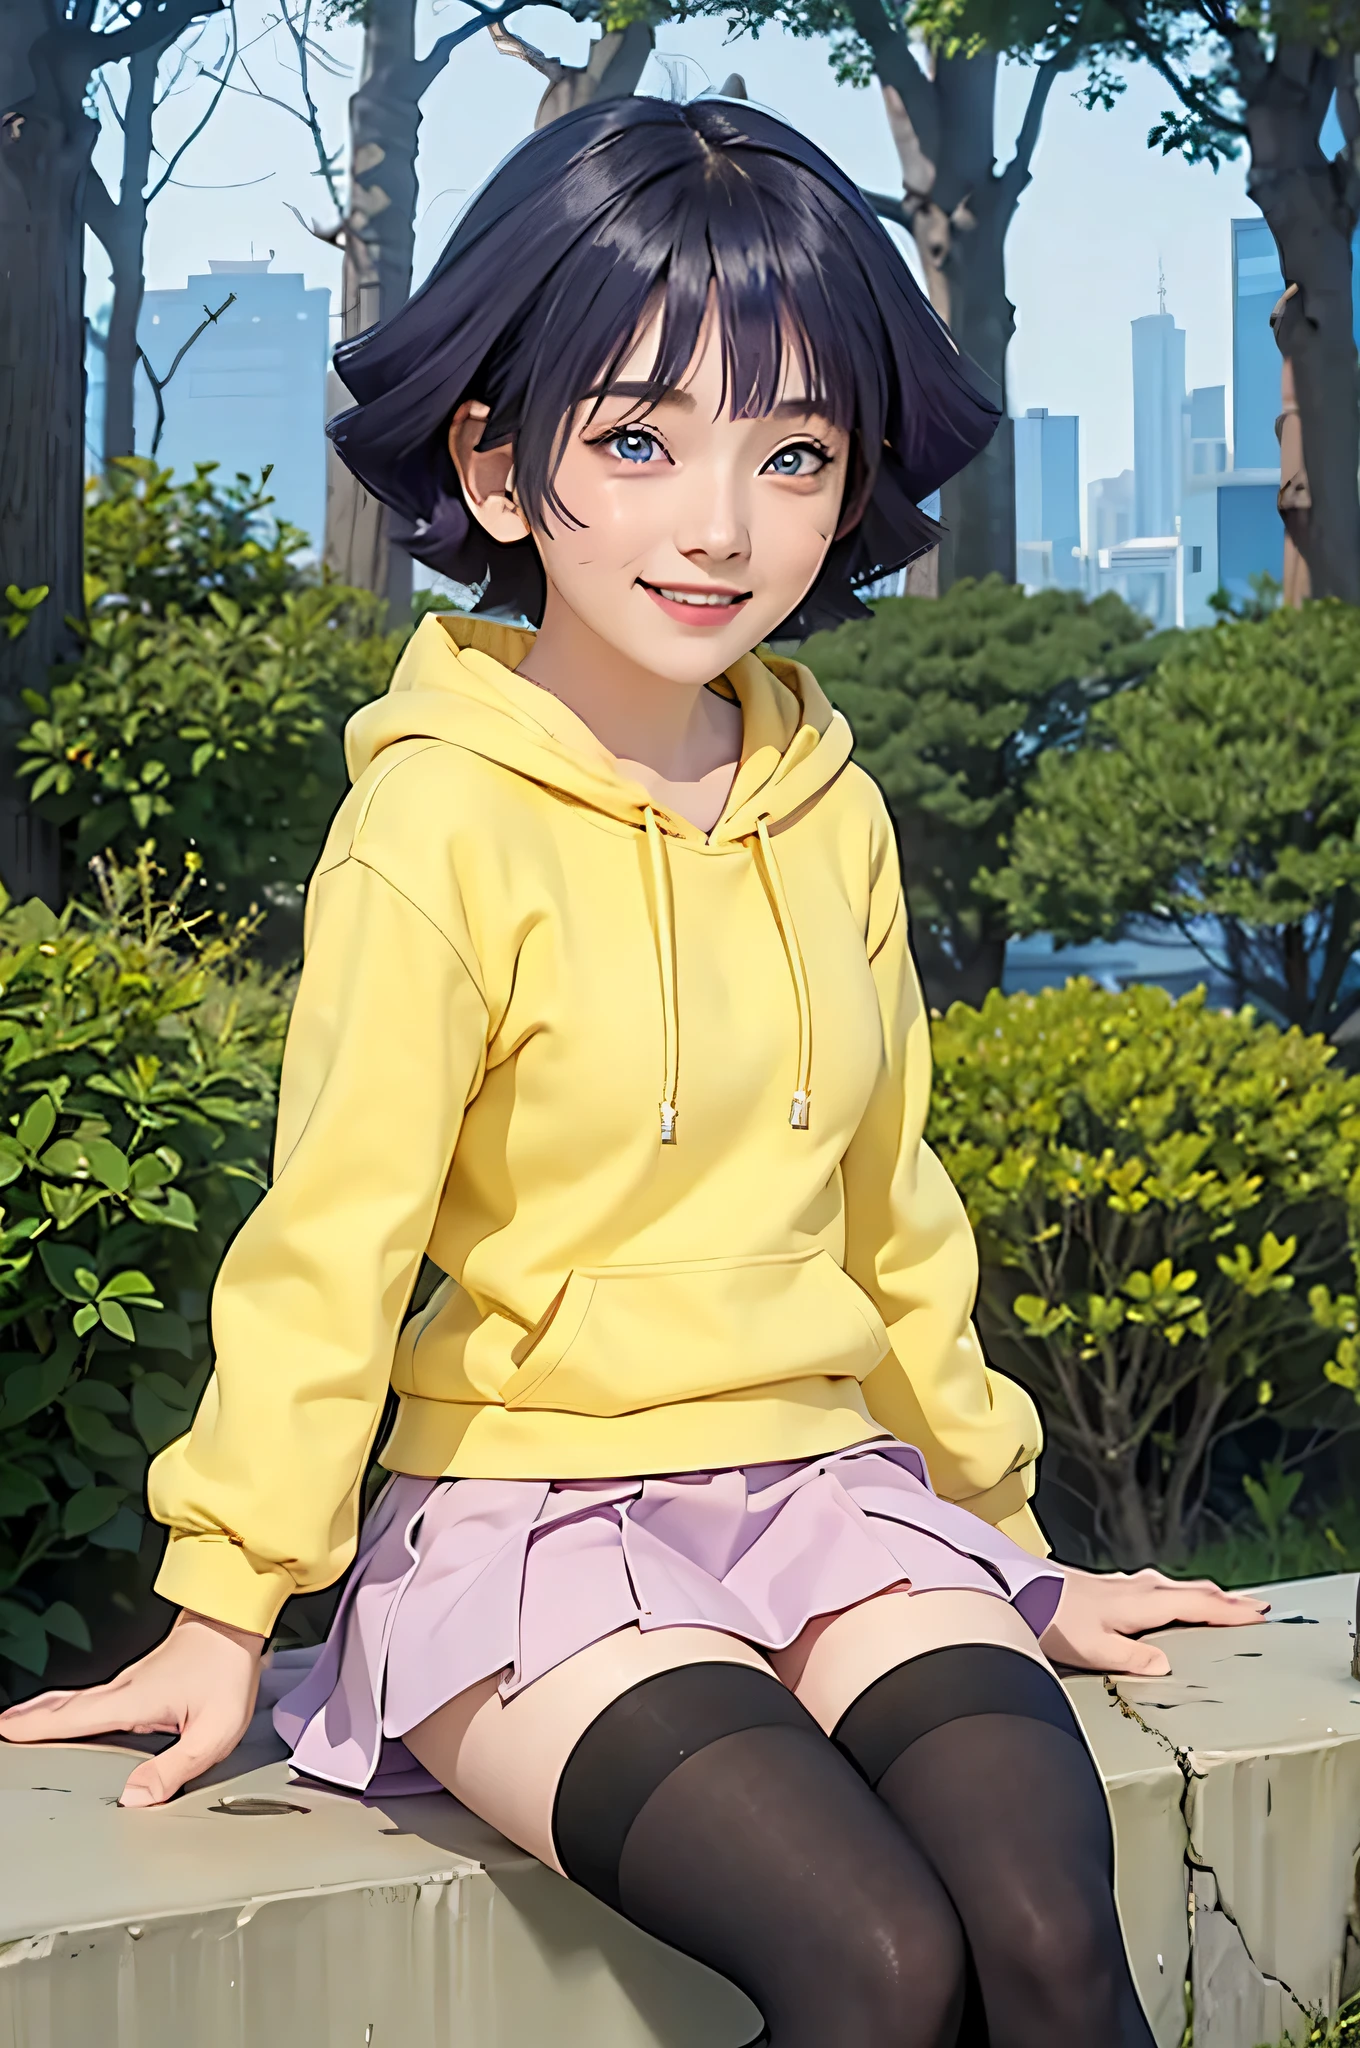 1 garota, Himawari anime naruto shipudden, cabelo curto , cabelo roxo, olhos azuis, lindo, roupas amarelas , Sorriso, realista clothes, roupas detalhadas, fundo da cidade, ultra detalhe, realista